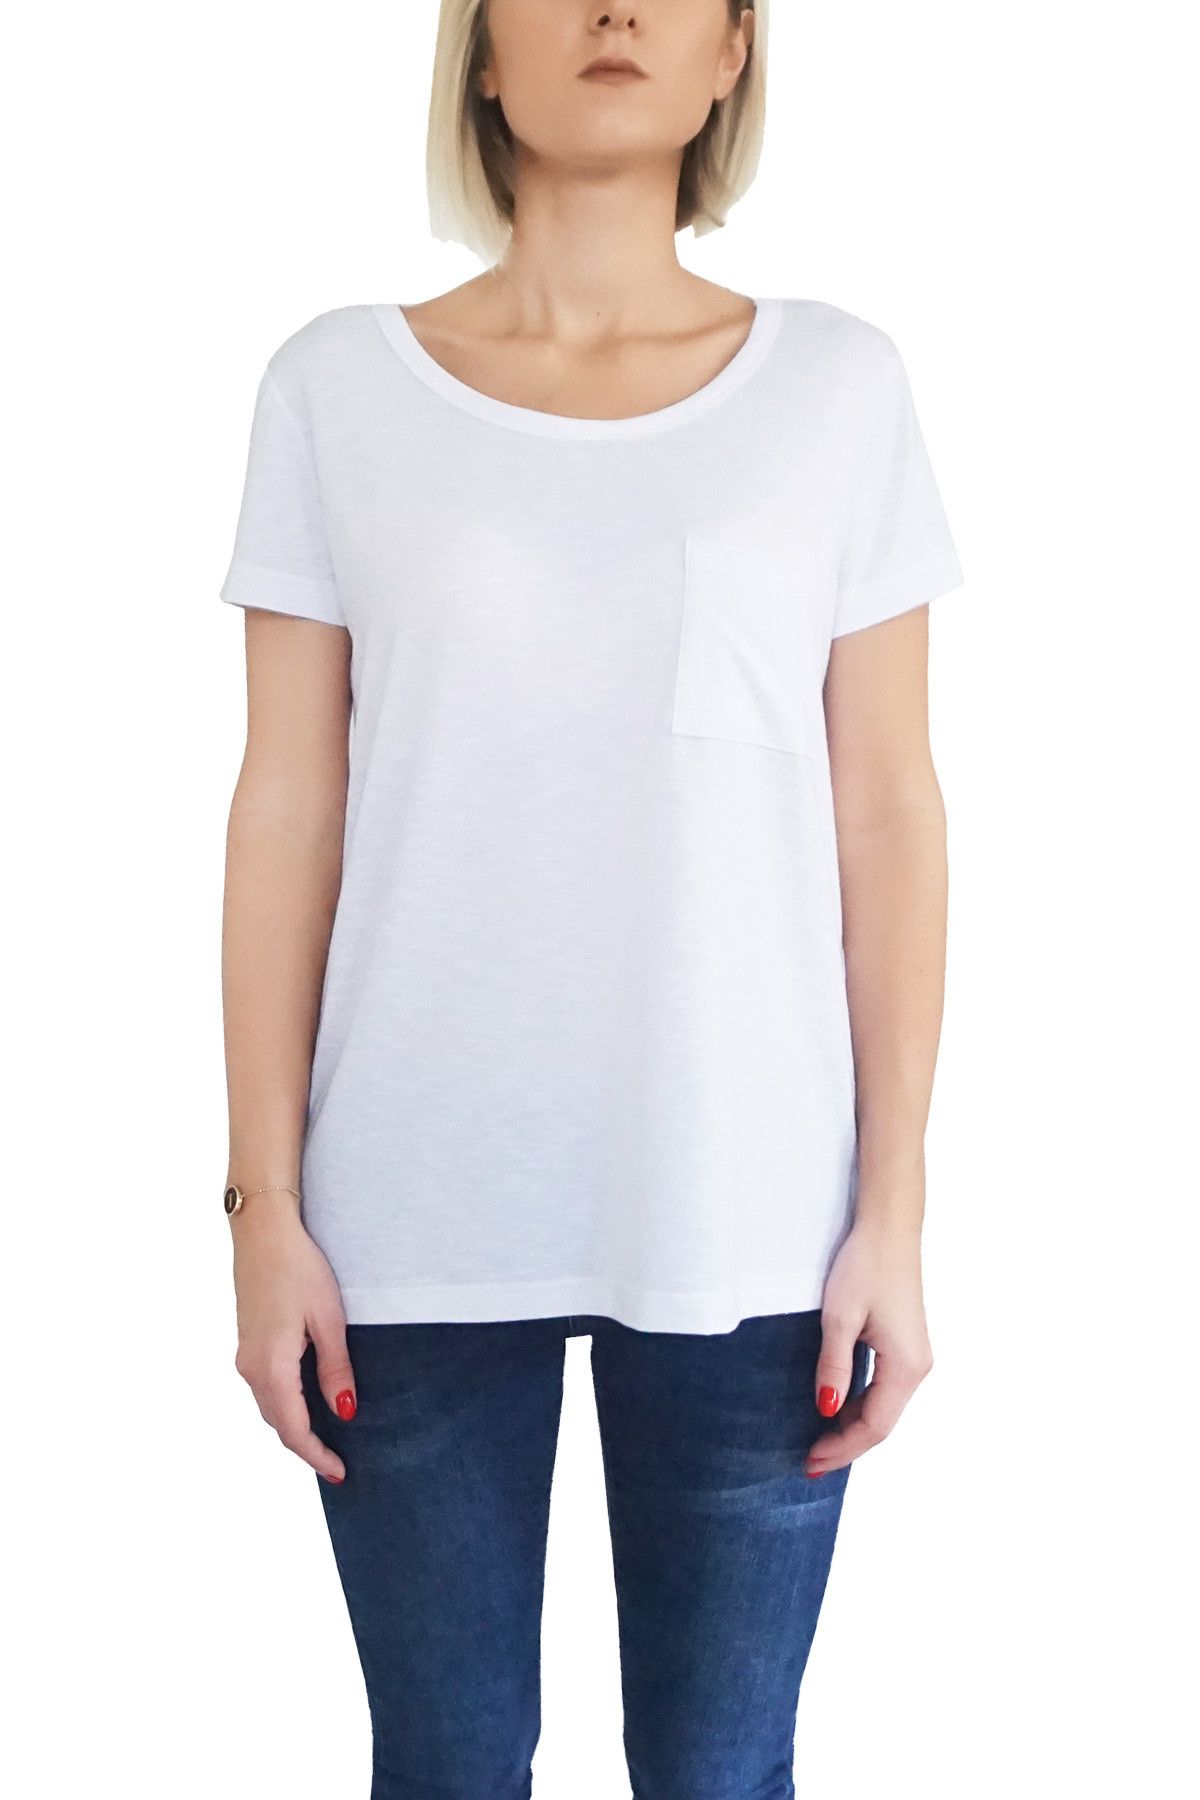 Mof Basics Kadın Beyaz T-Shirt GSYT-B